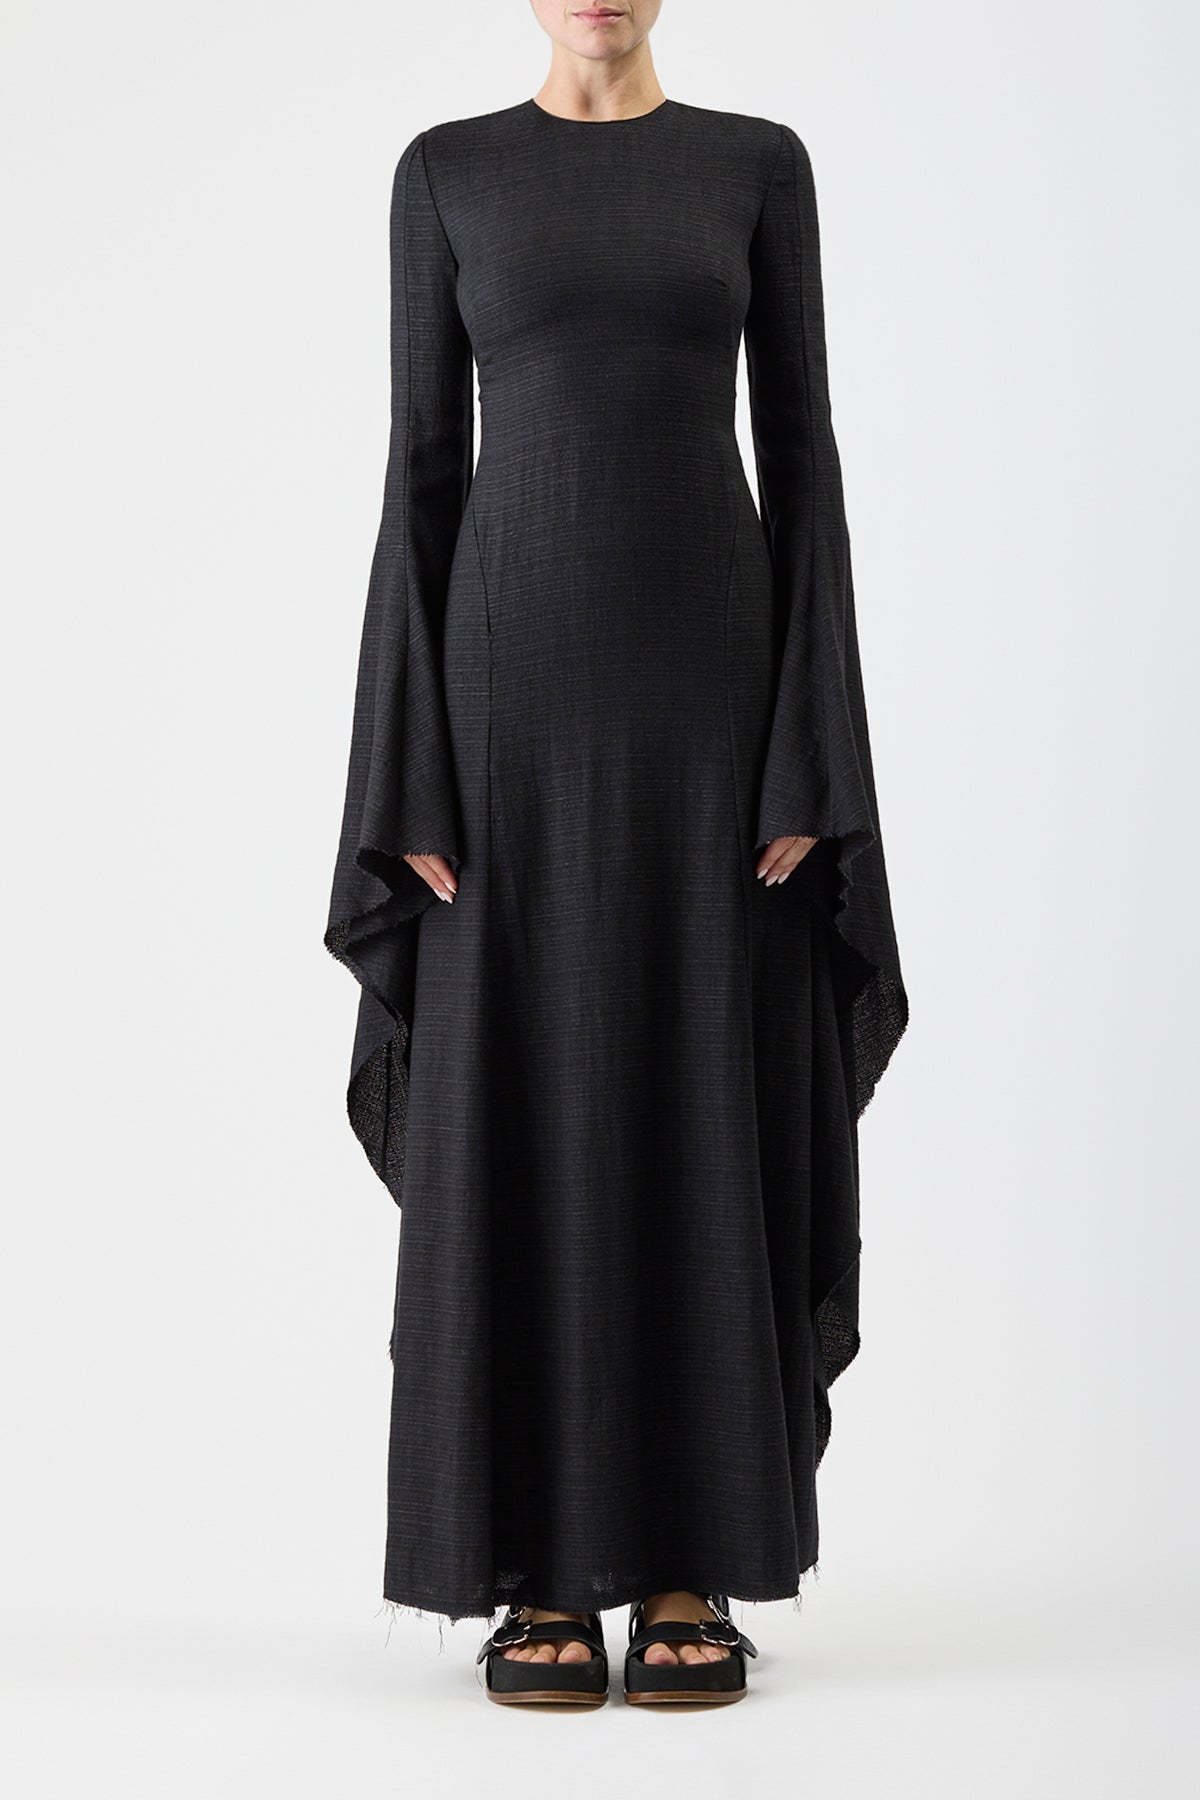 Sigrud Draped Dress in Black Silk Wool Gauze